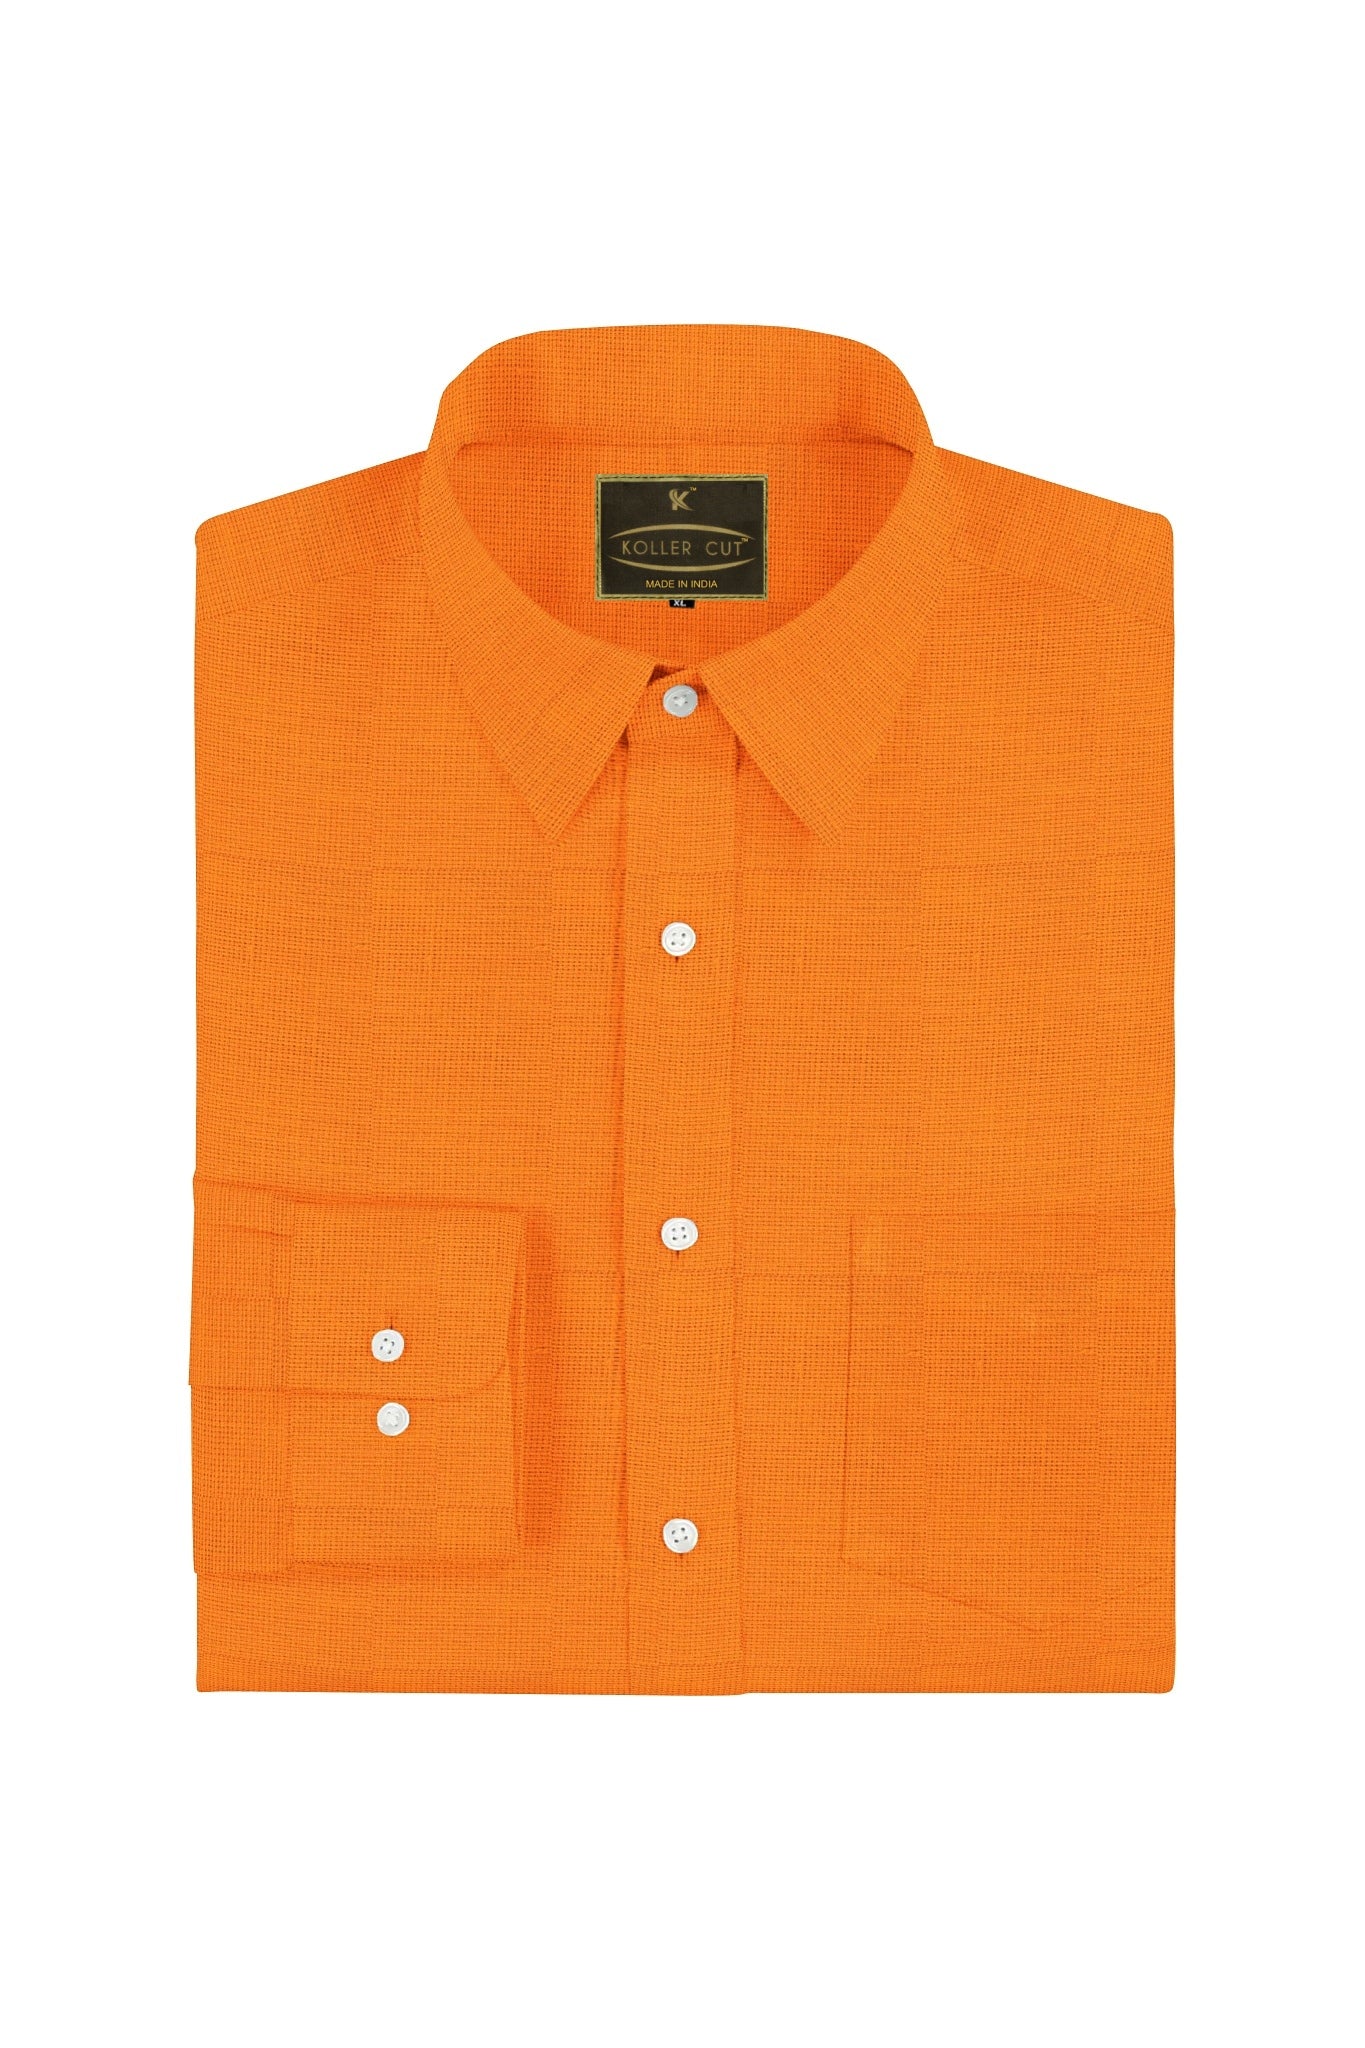 Cody shirt in apricot linen - Short Sleeve - Orange - Linen - Male